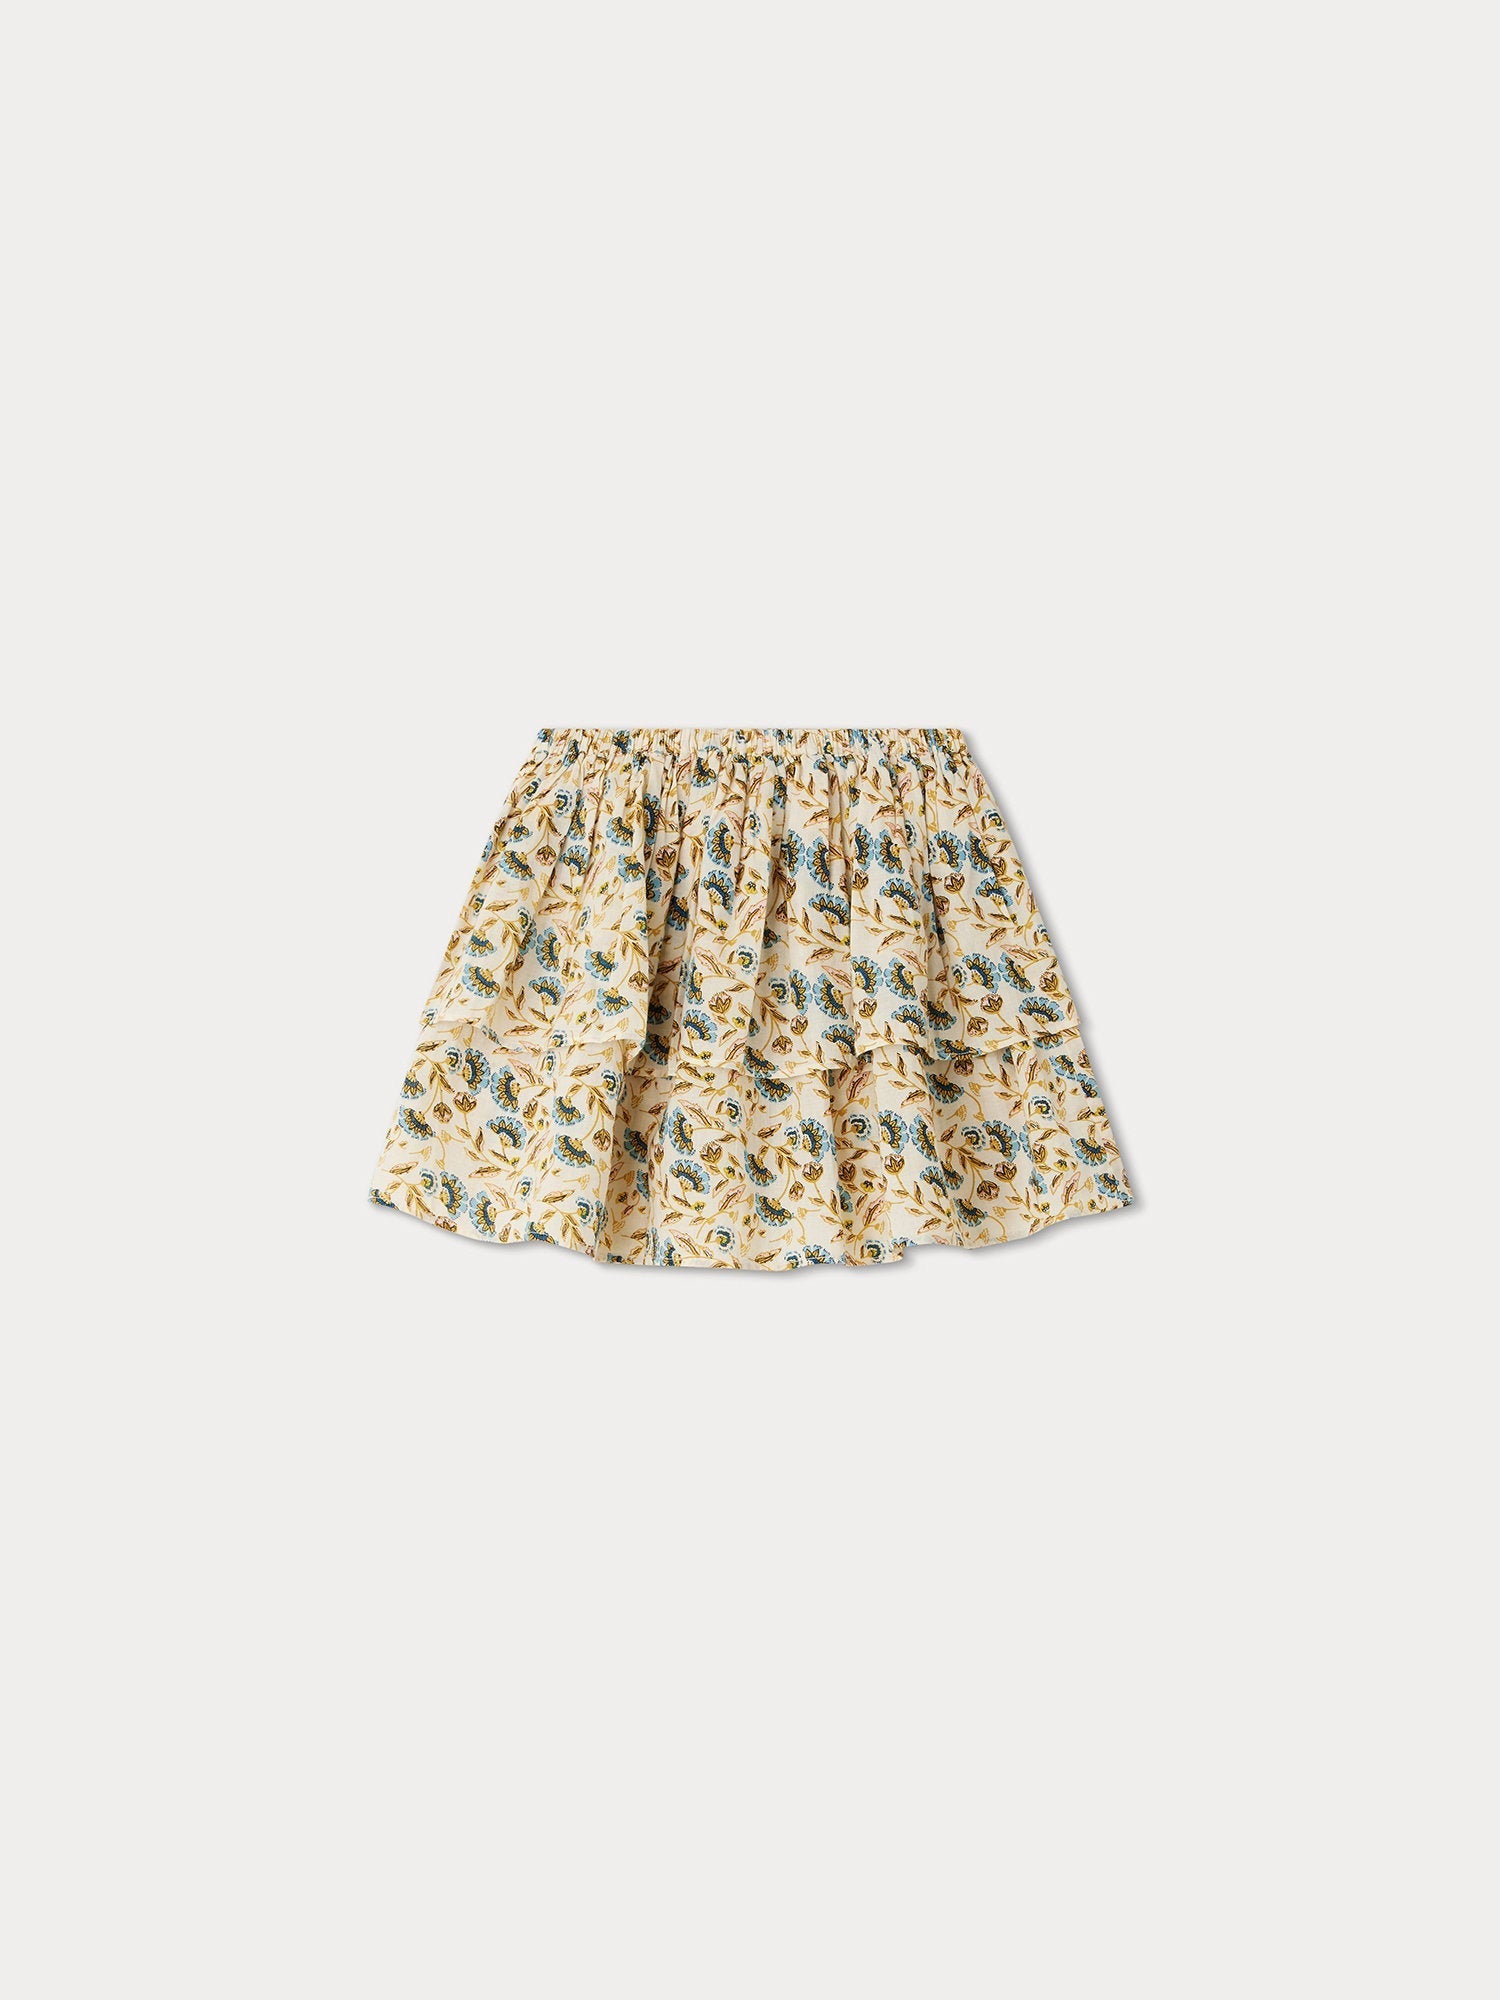 Girls Yellow Floral Cotton Skirt